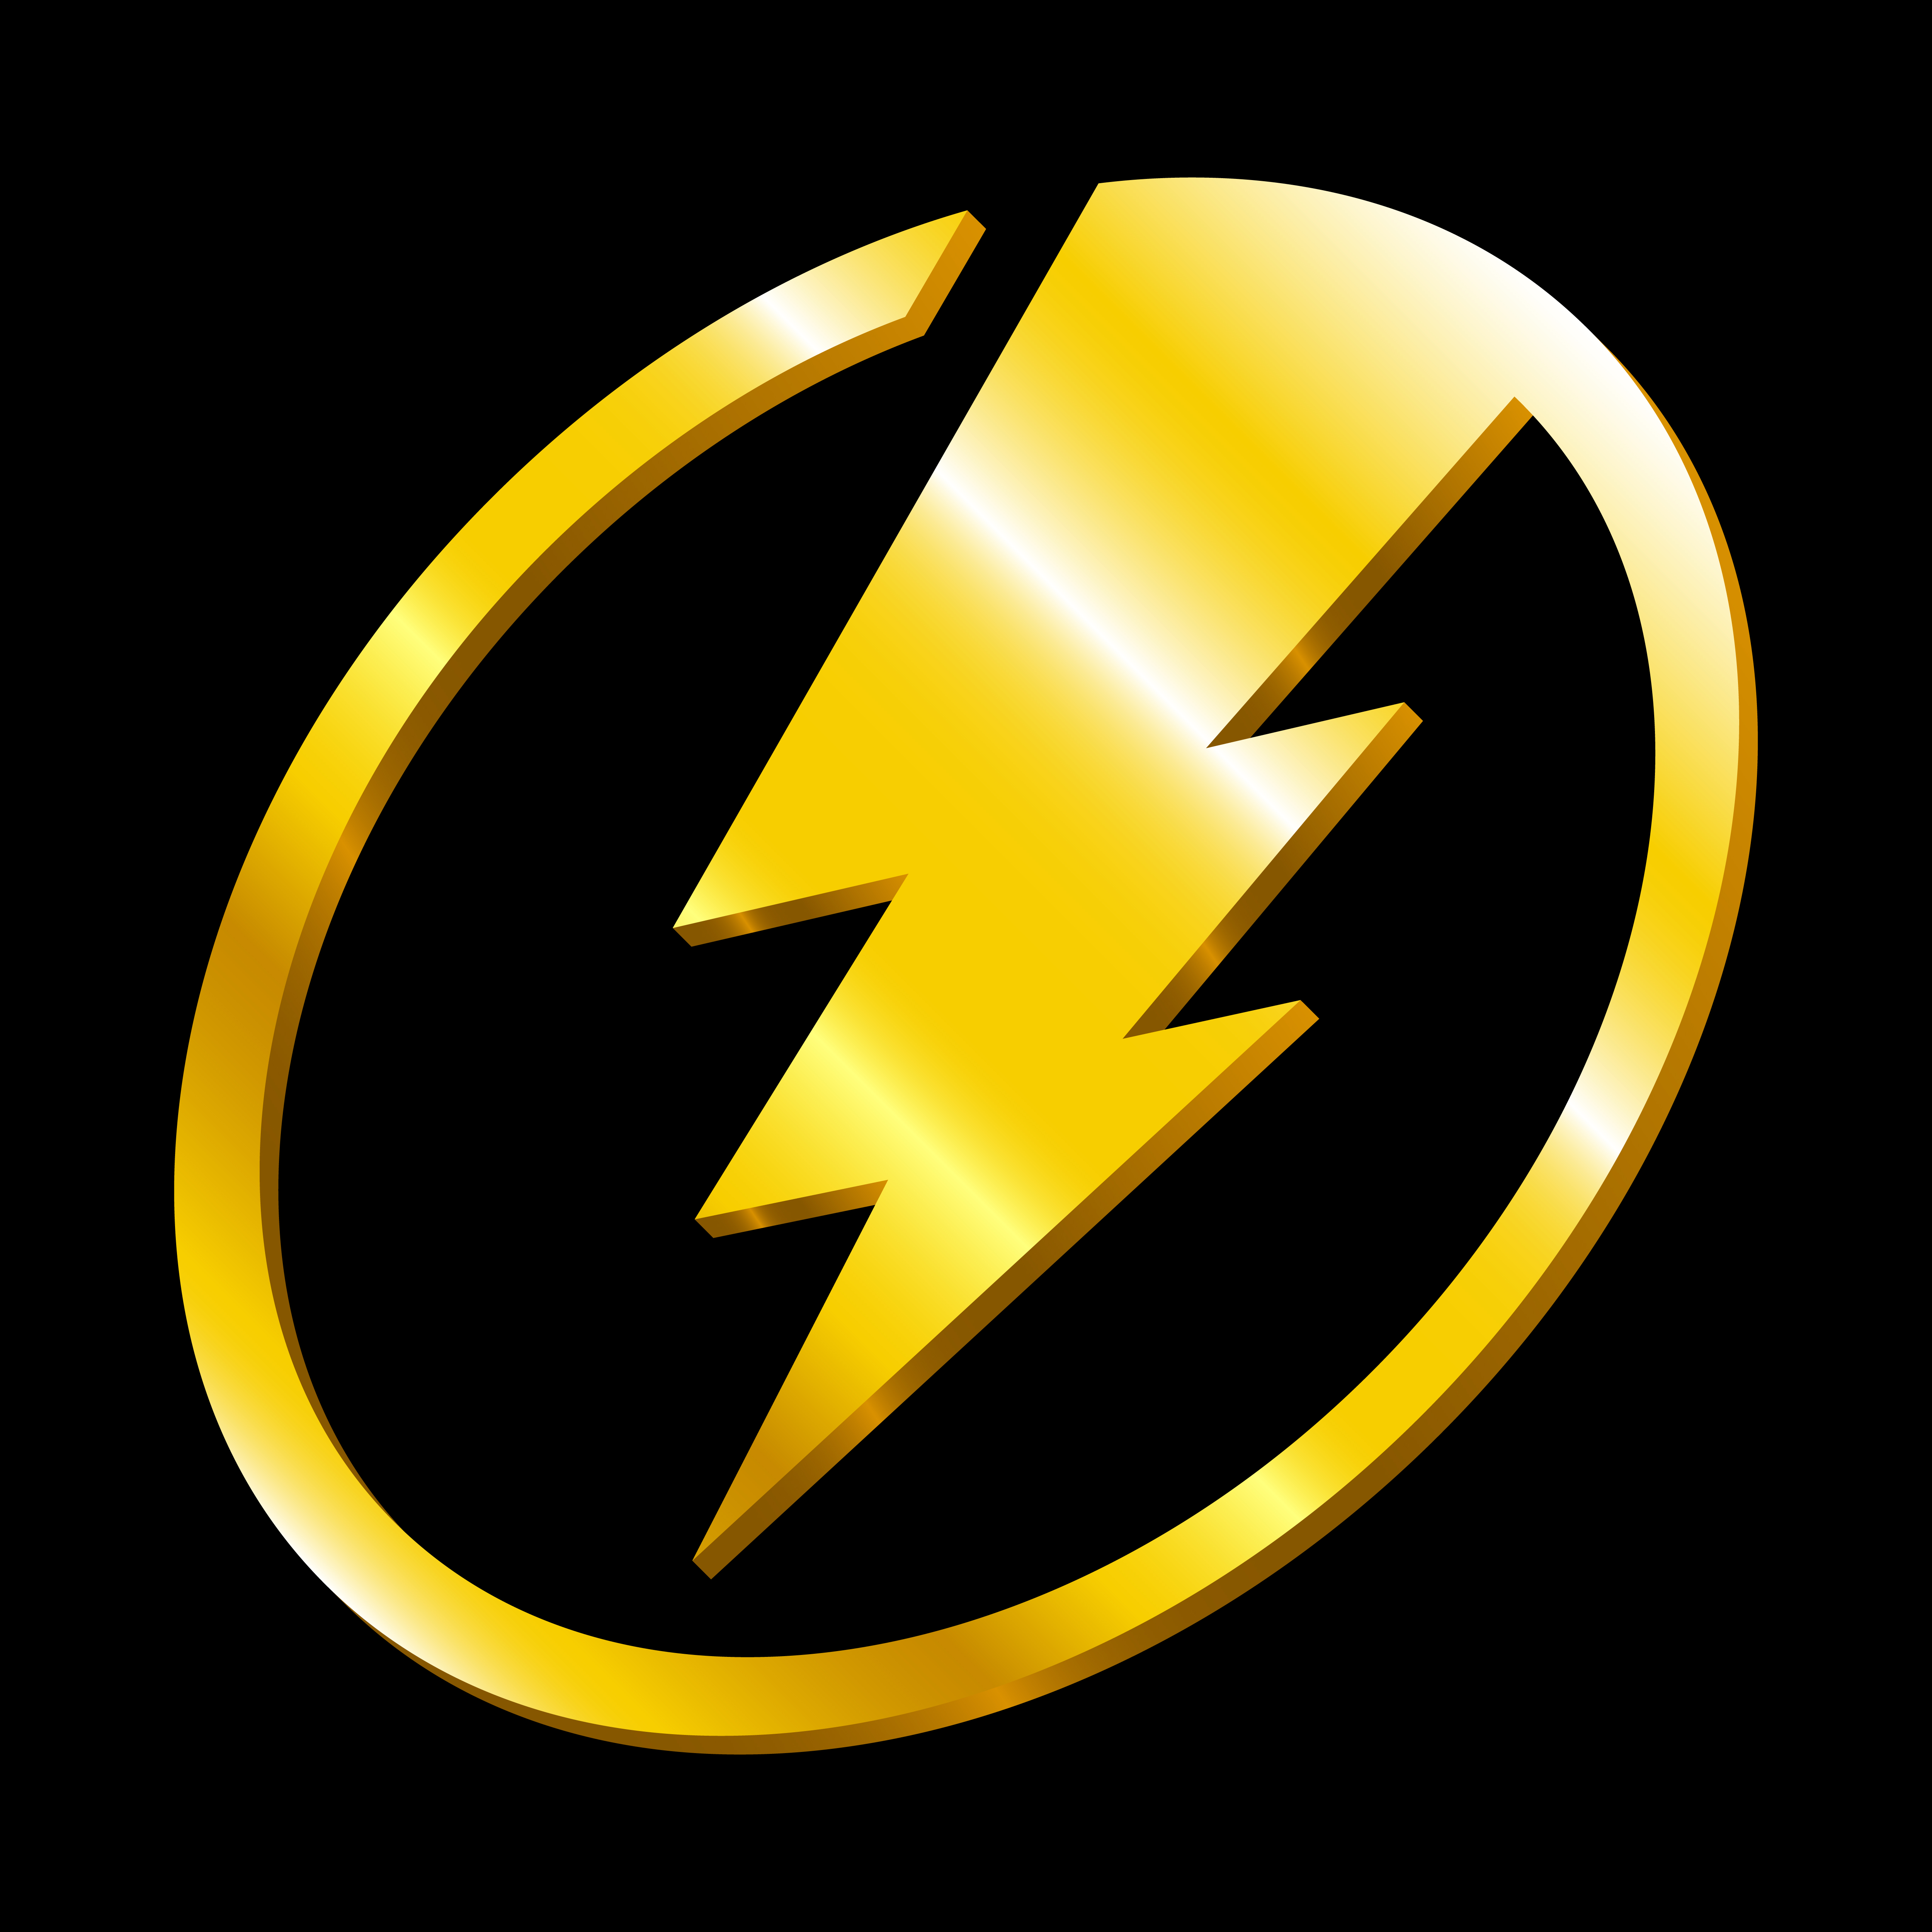 Lightning bolt icon 533538 - Download Free Vectors ...